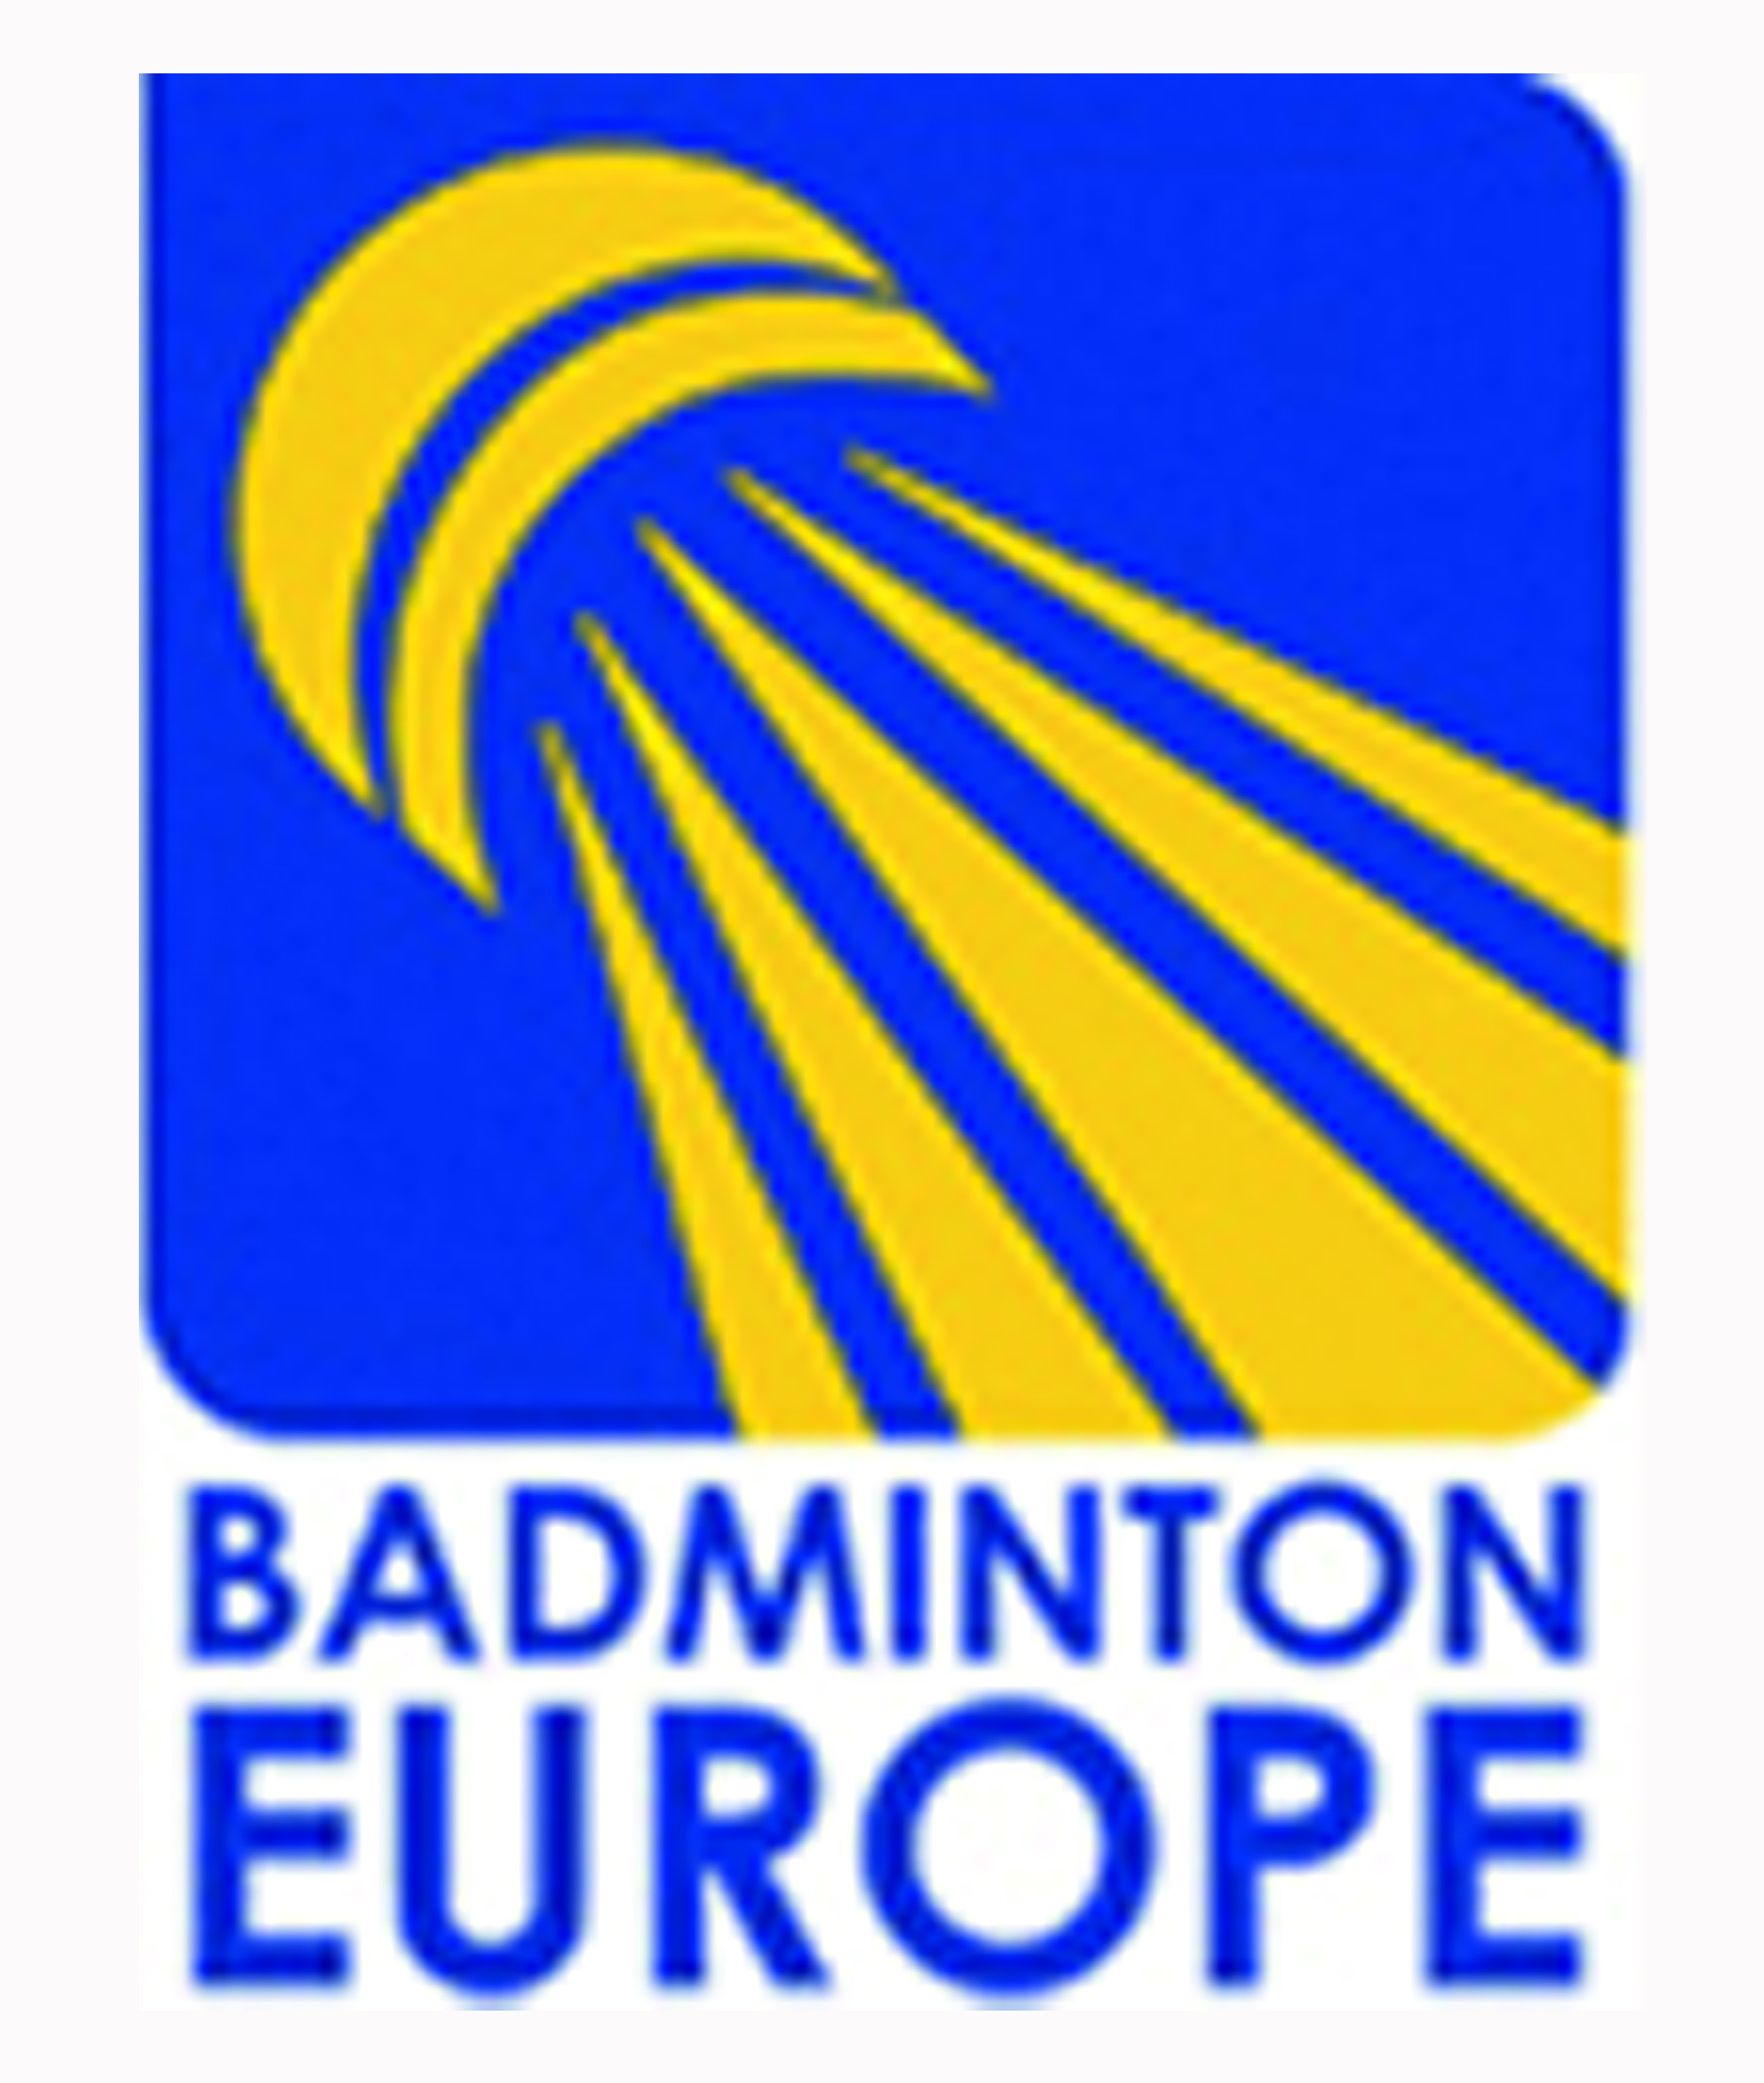 Badminton Europe Logo